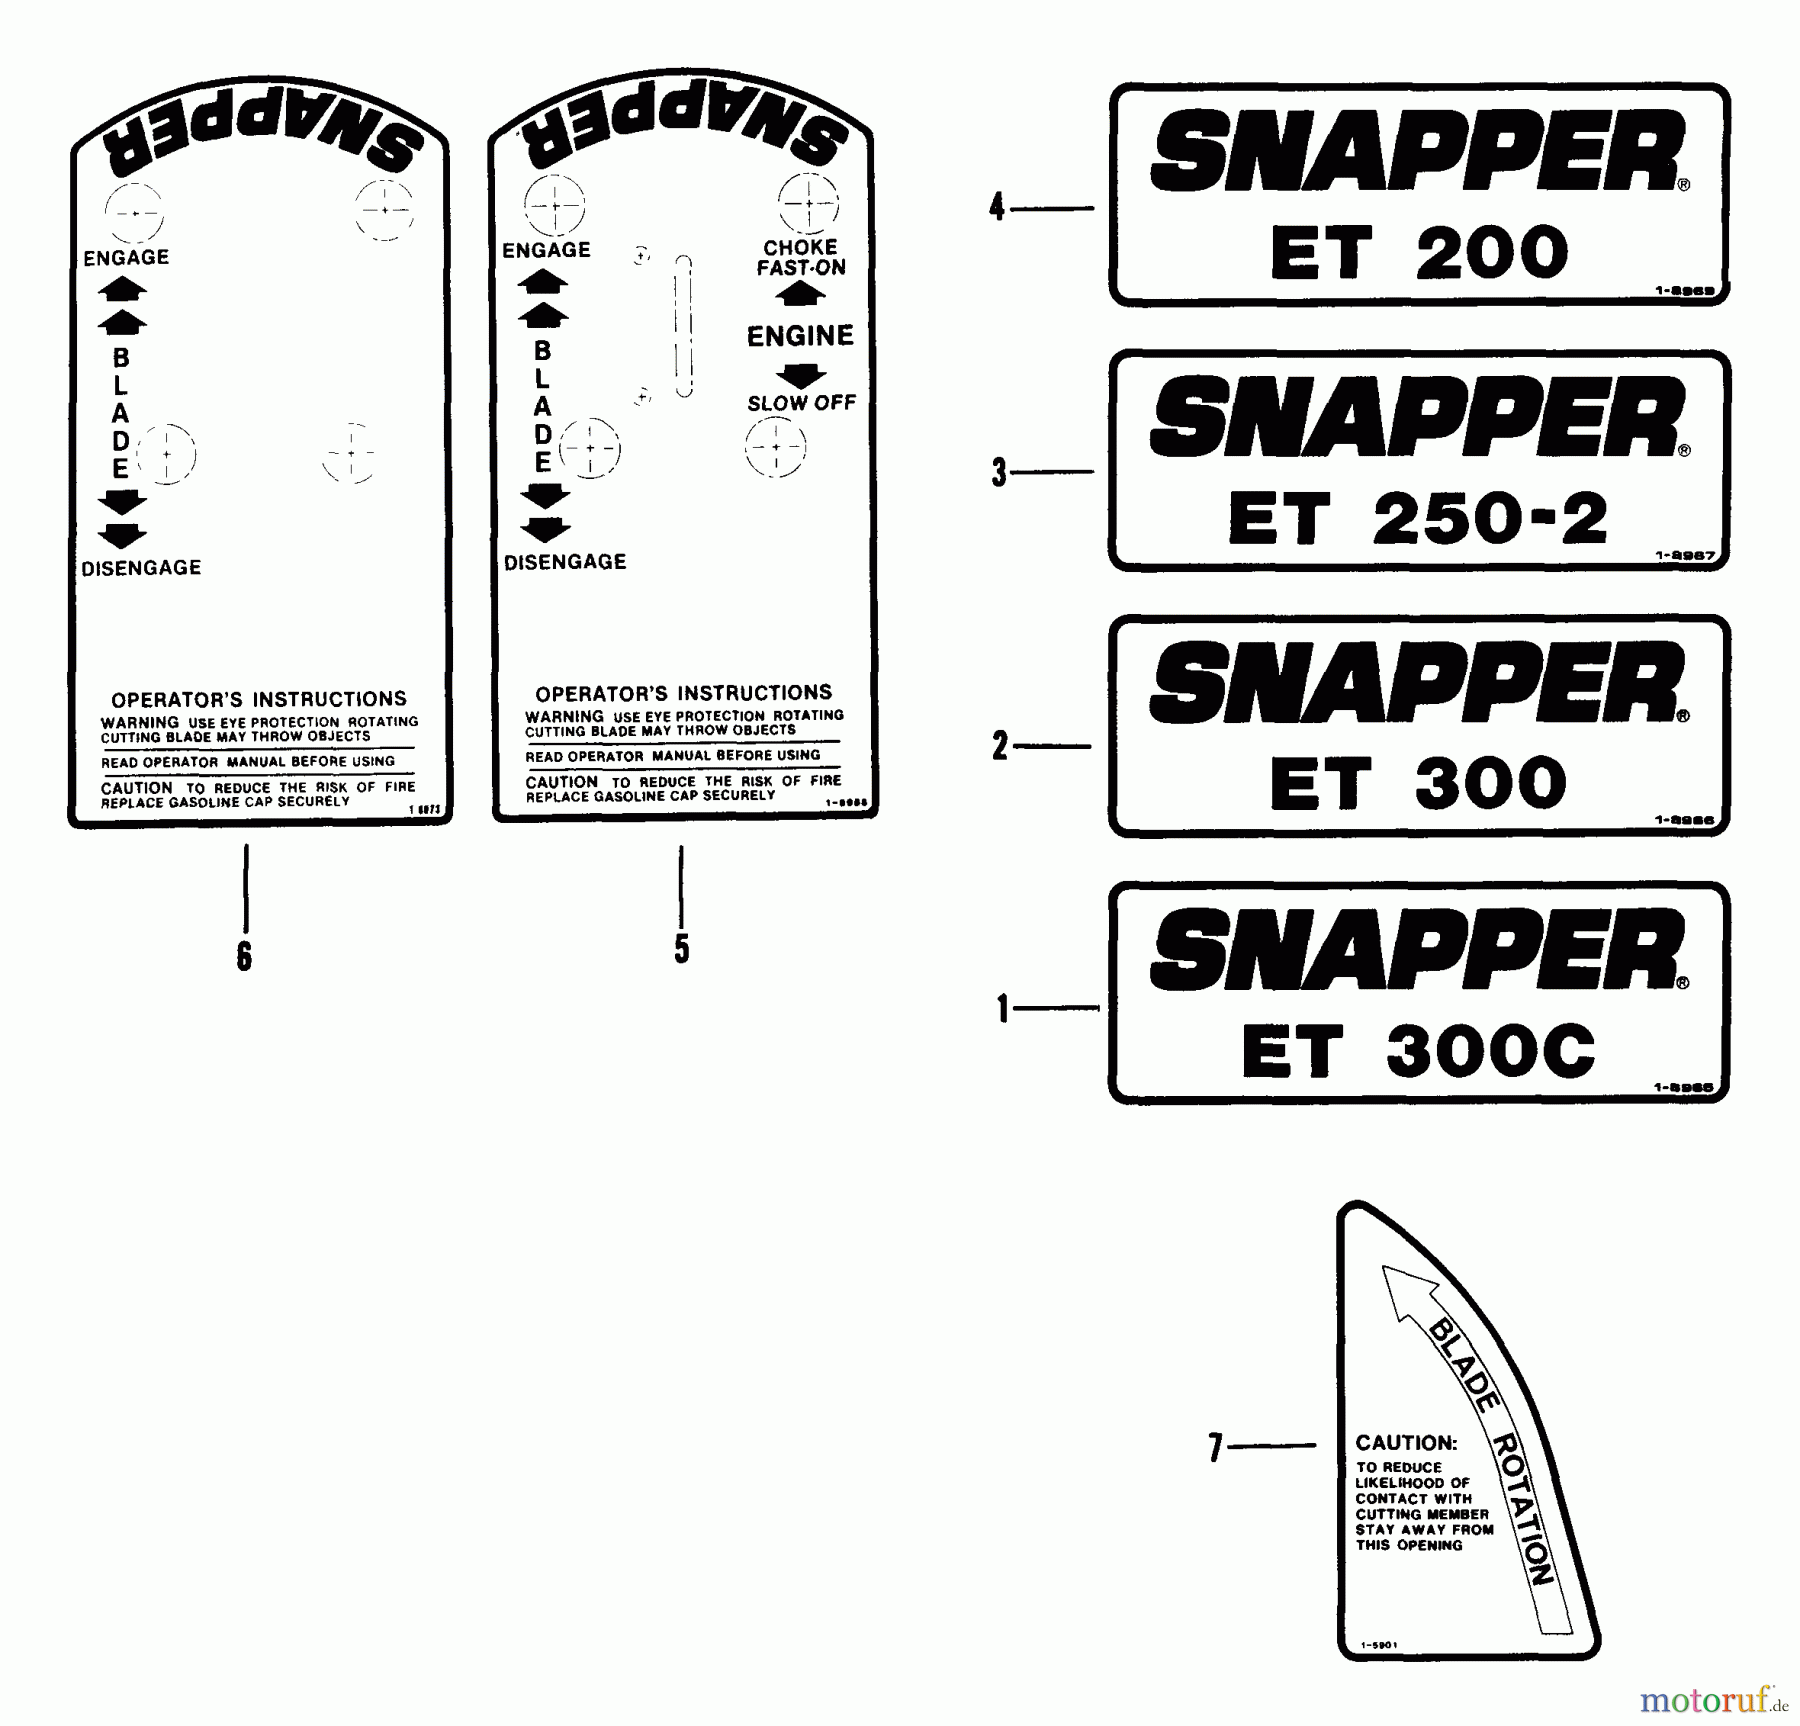  Snapper Kantenschneider ETC300B - Snapper Commercial Edger Trimmer, 3 HP, Series 0 Decals